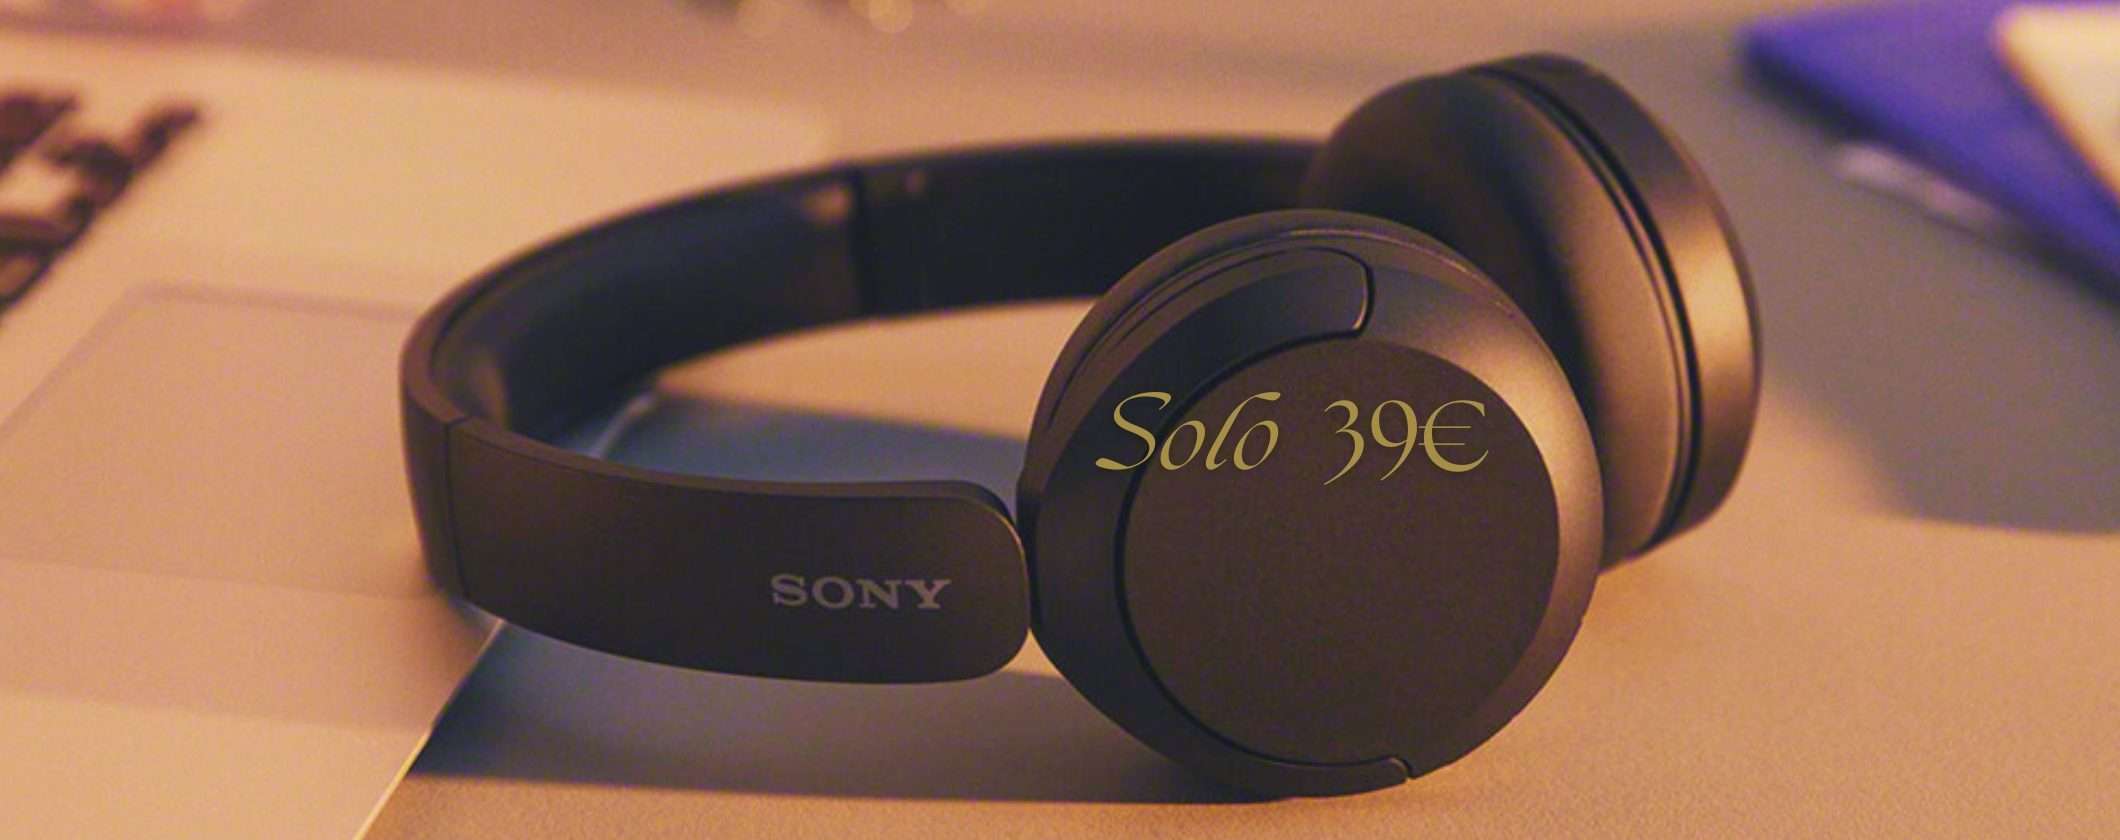 Cuffie Bluetooth Sony WH-CH520: 50 ore di ascolto top a soli 39€